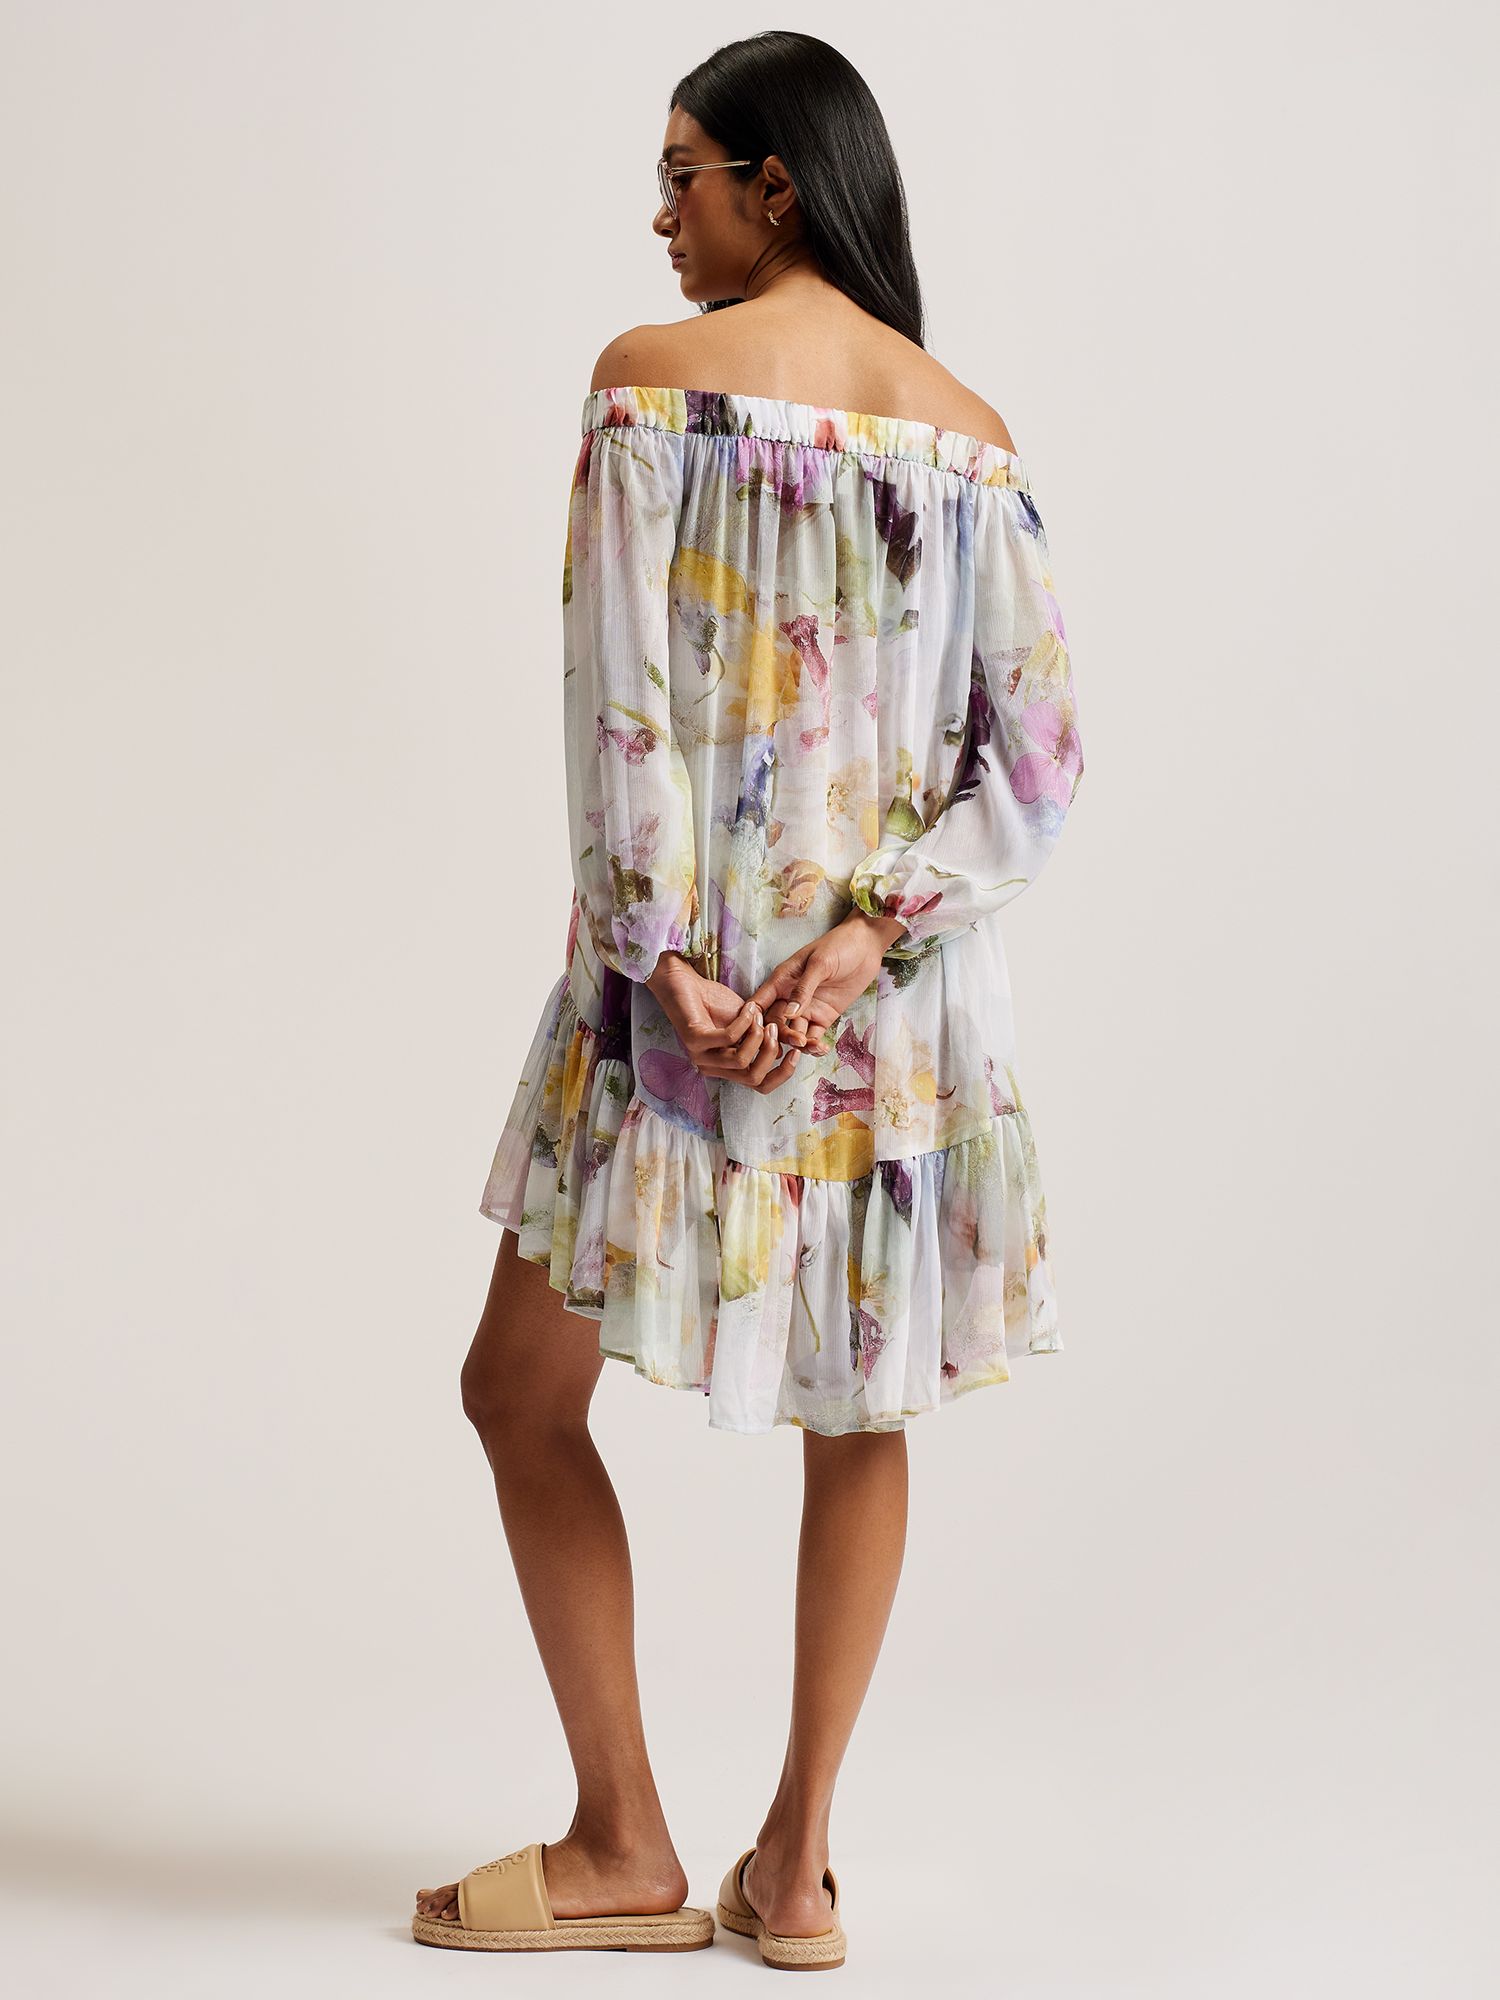 Ted Baker Dashan Bardot Abstract Print Mini Beach Dress, White/Multi, S